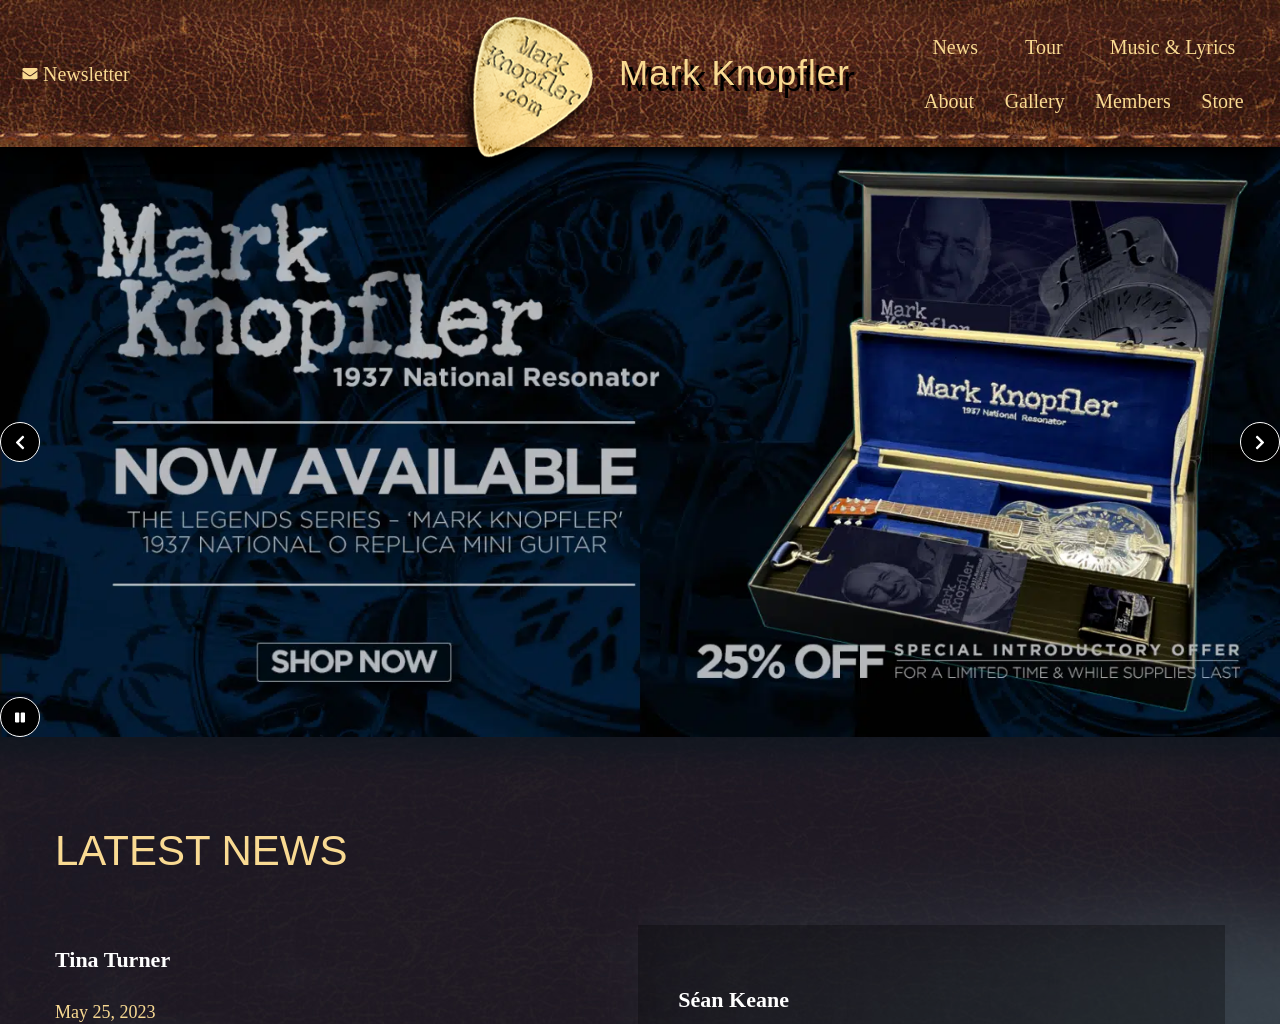 www.markknopfler.com